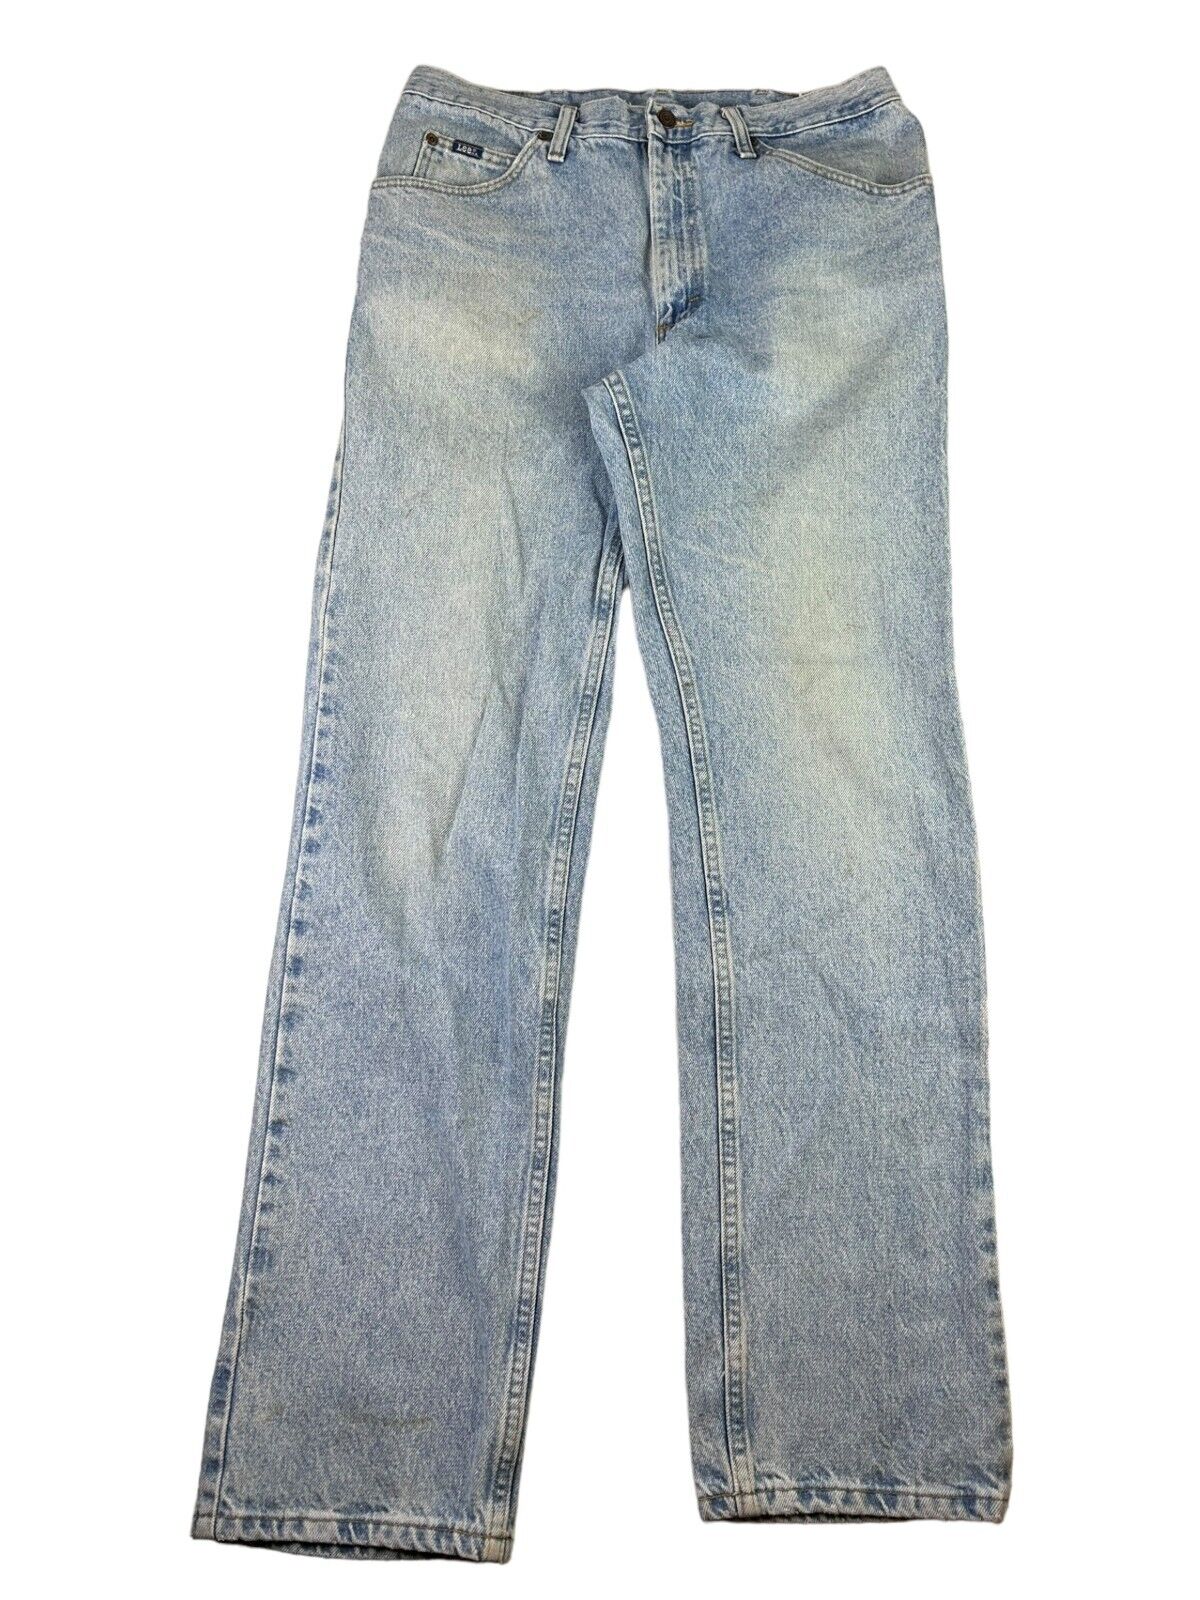 Vintage Lee Relaxed Fit Light Wash Denim Pants Size 30W Blue